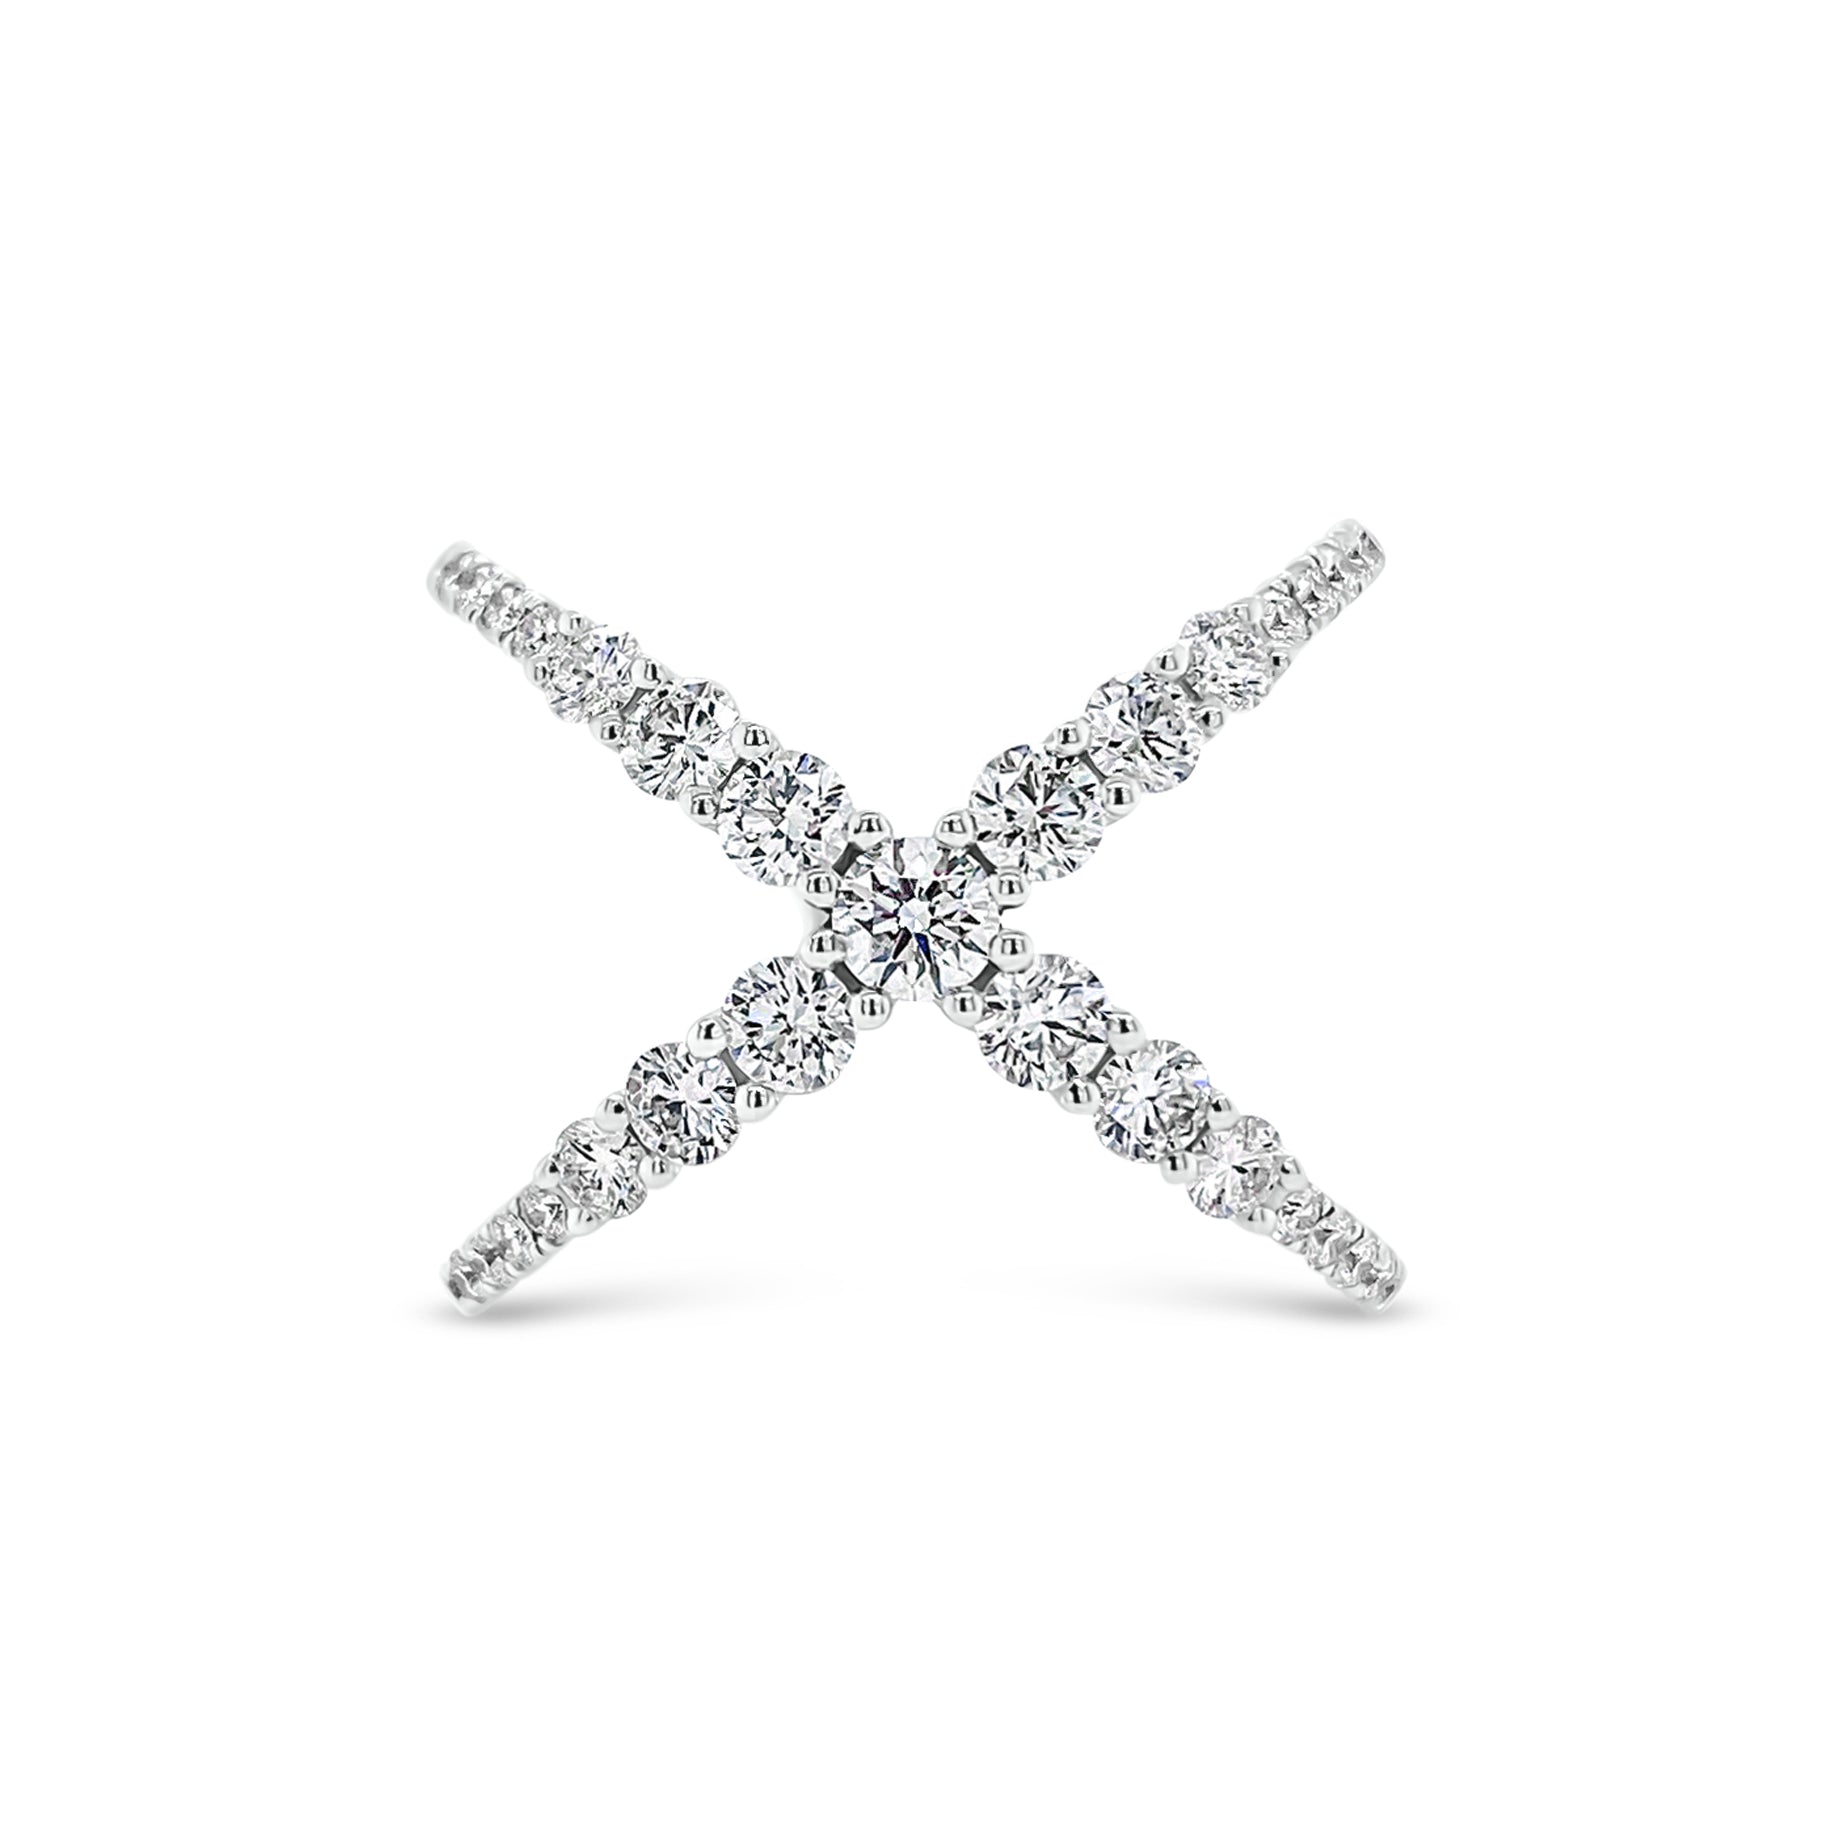 Diamond Criss-Cross Ring  -18K gold weighing 4.89 grams  -20 round diamonds totaling 0.17 carats  -13 round diamonds totaling 0.89 carats